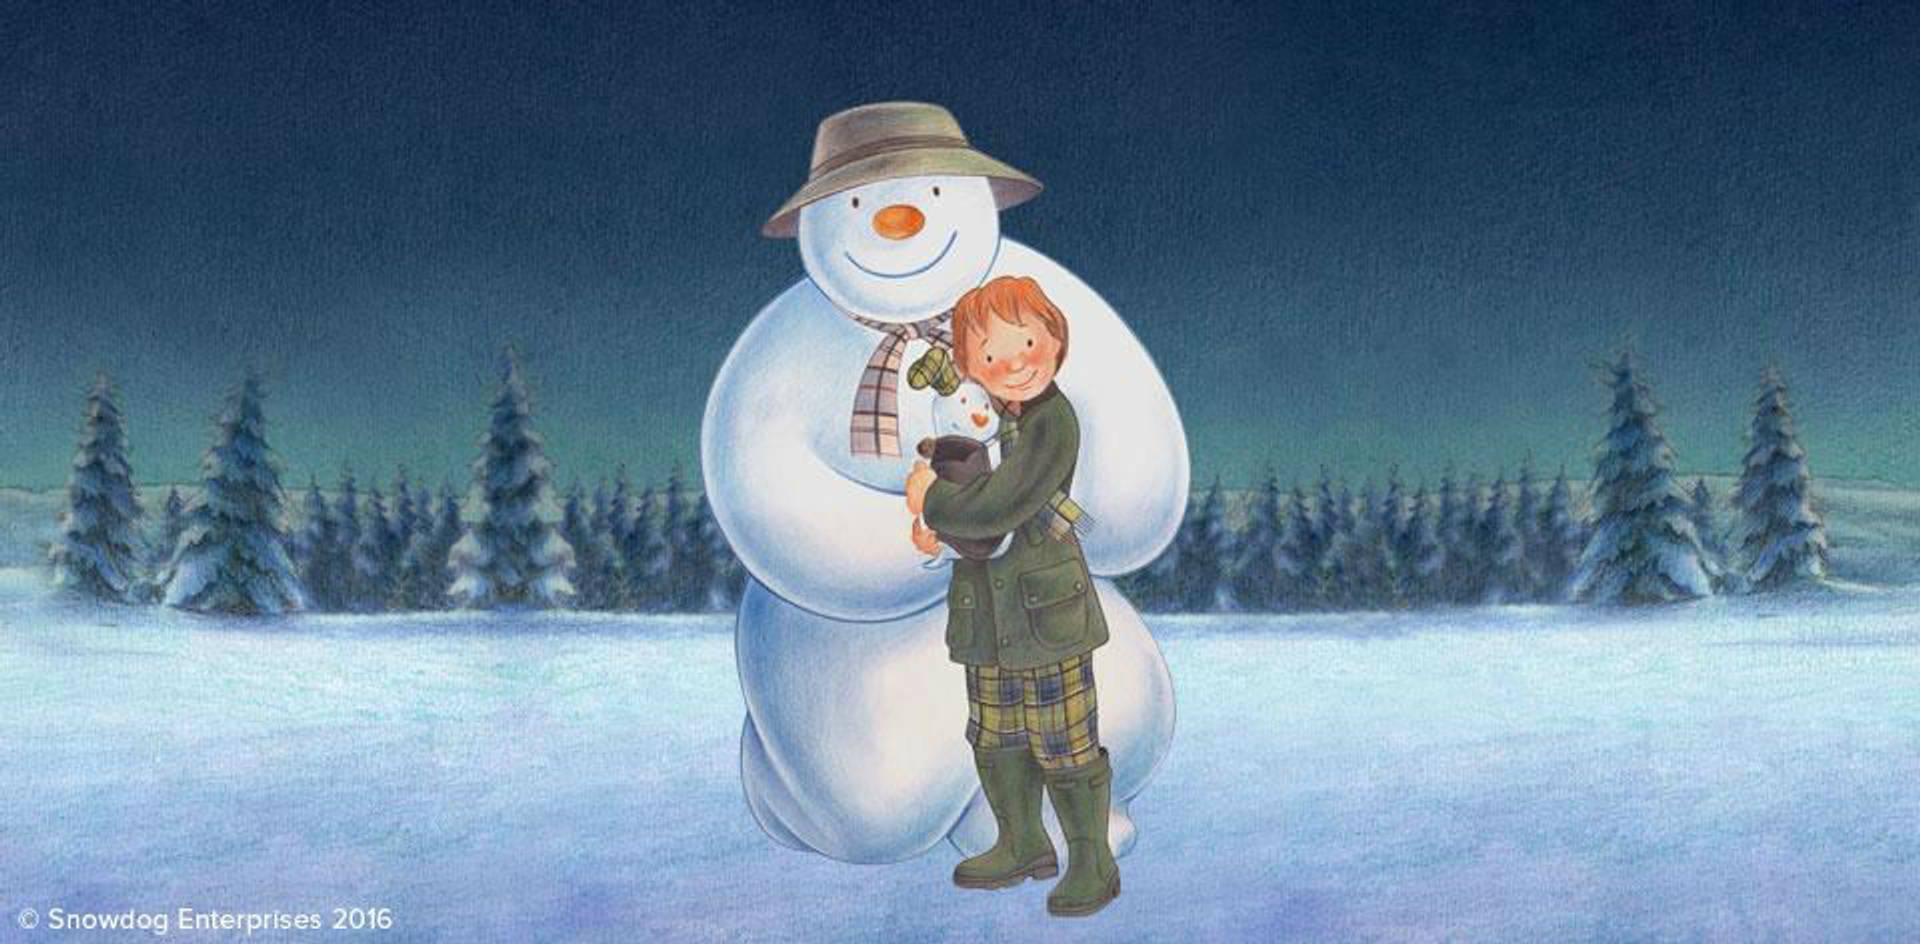 Barbour celebrates British nostalgia with The Snowman